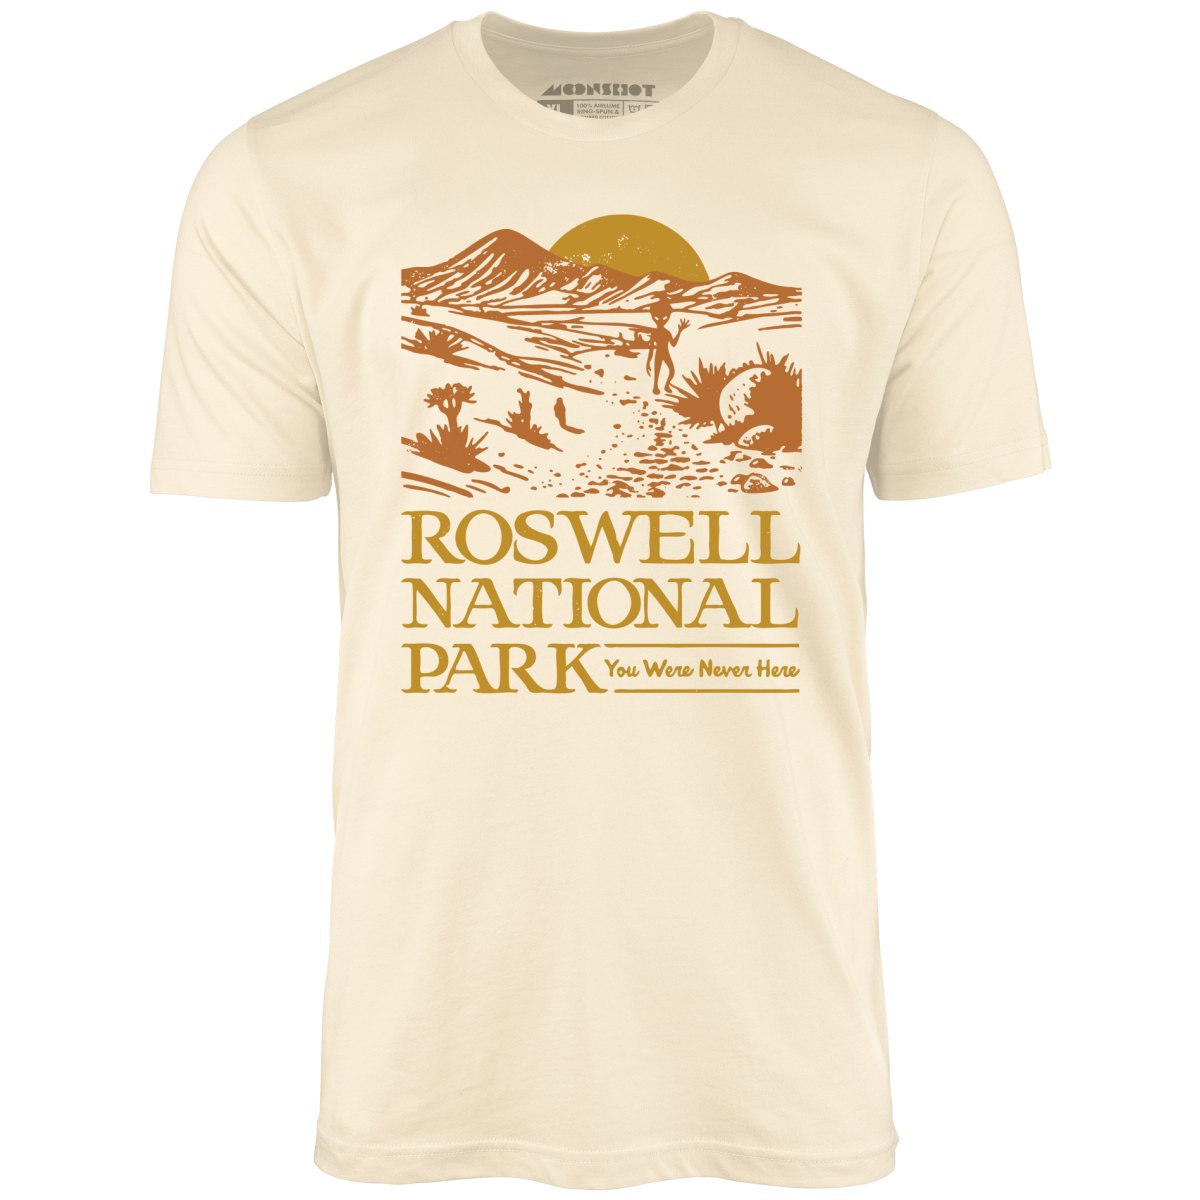 Roswell National Park - Unisex T-Shirt